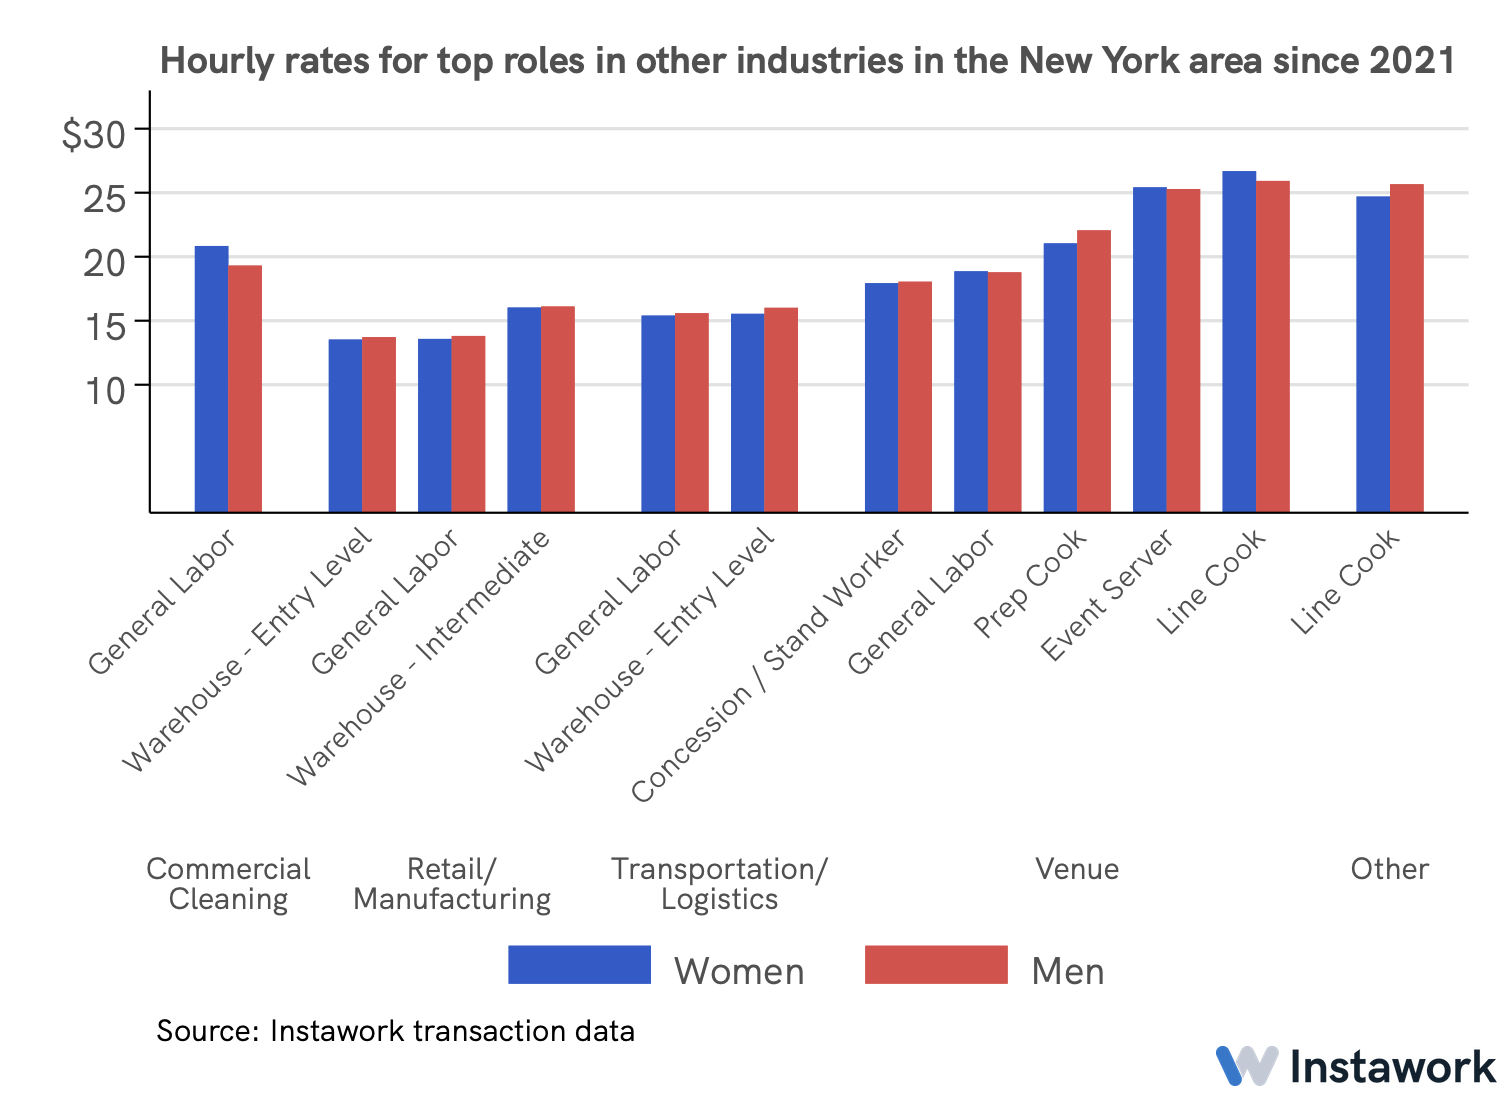 11 Mar 2022 gender pay gap in New York 2